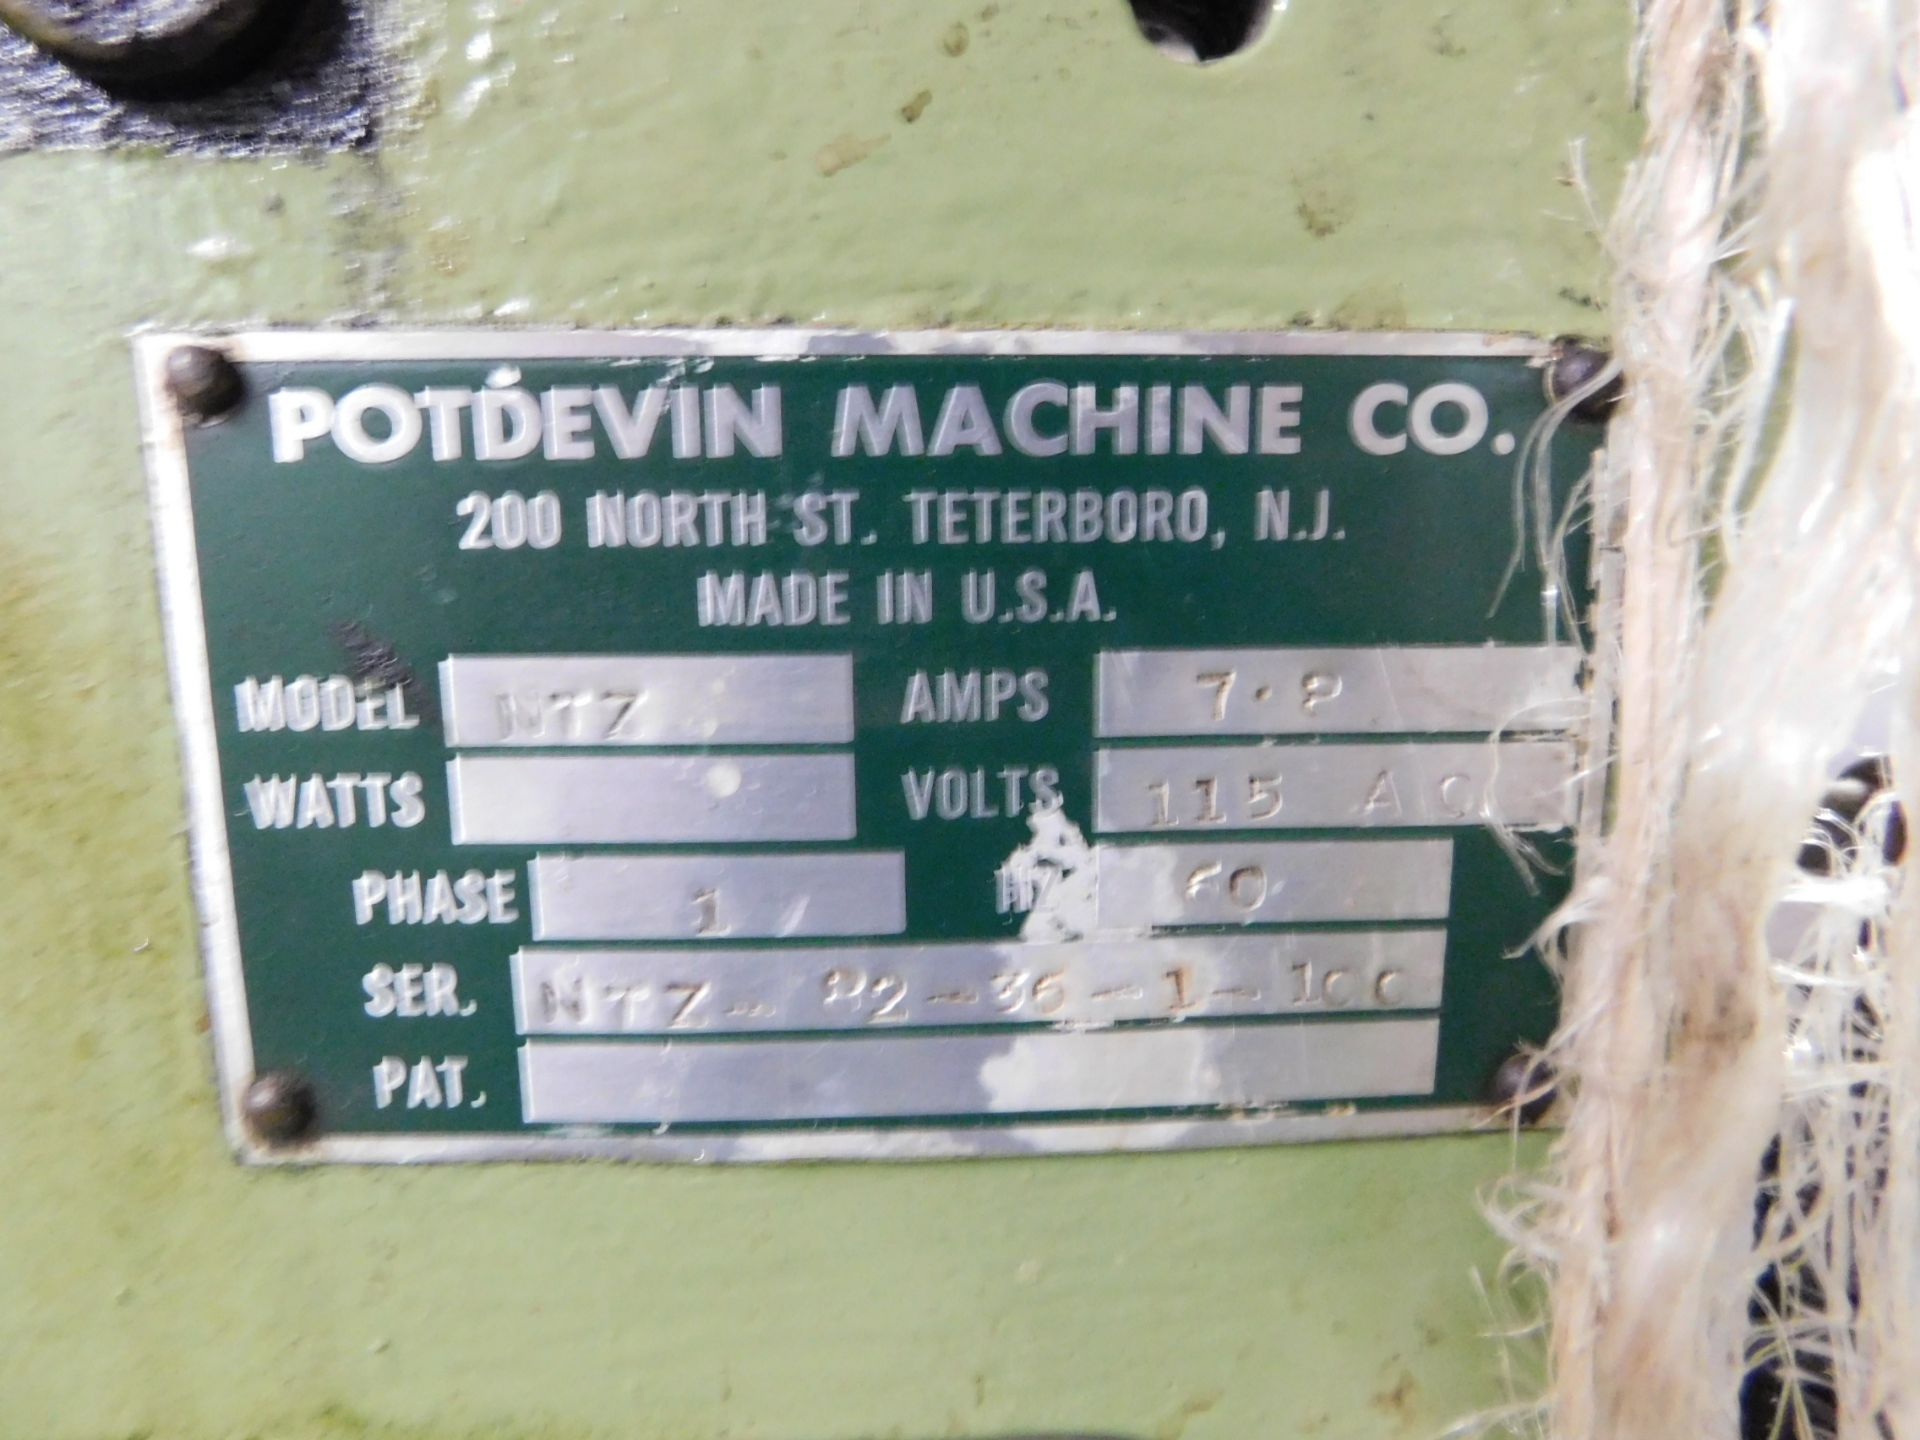 Potdevin Model NTZ Adhesive Coating Machine SN NTZ-82-36--1-100, 36" Rolls, 115V, 1 phs - Image 9 of 9